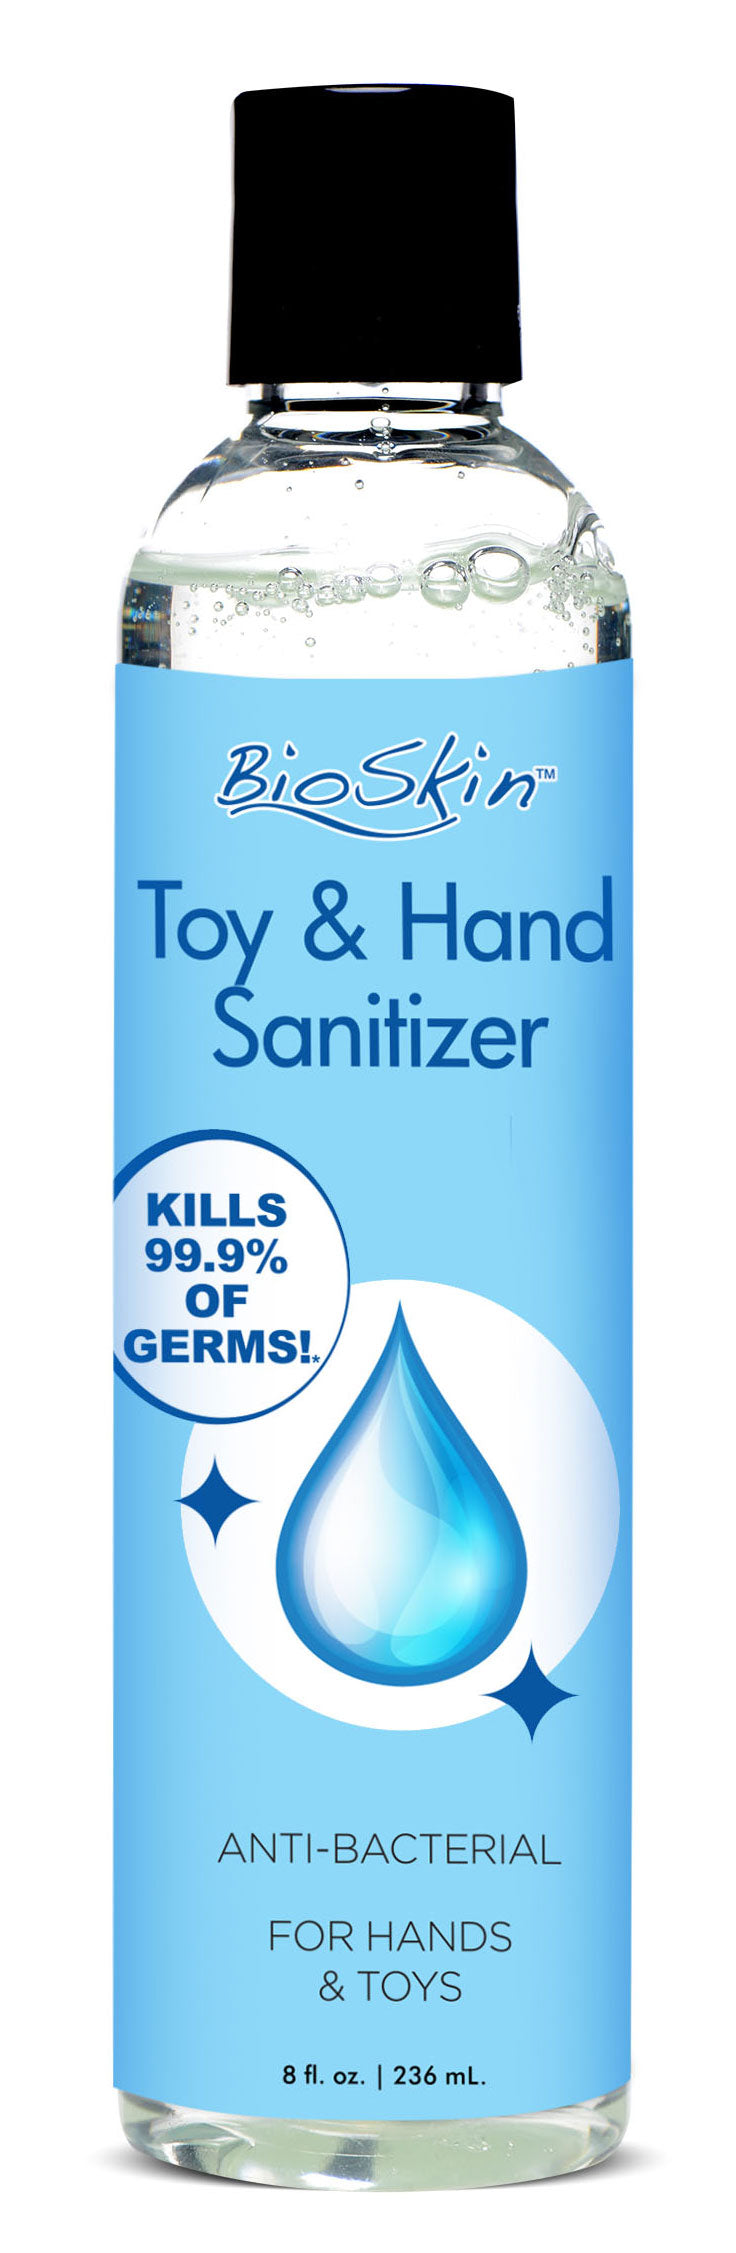 Bioskin Toy and Hand Sanitizer - 8 oz - CN-30-0800-00 - UPC-653078941920